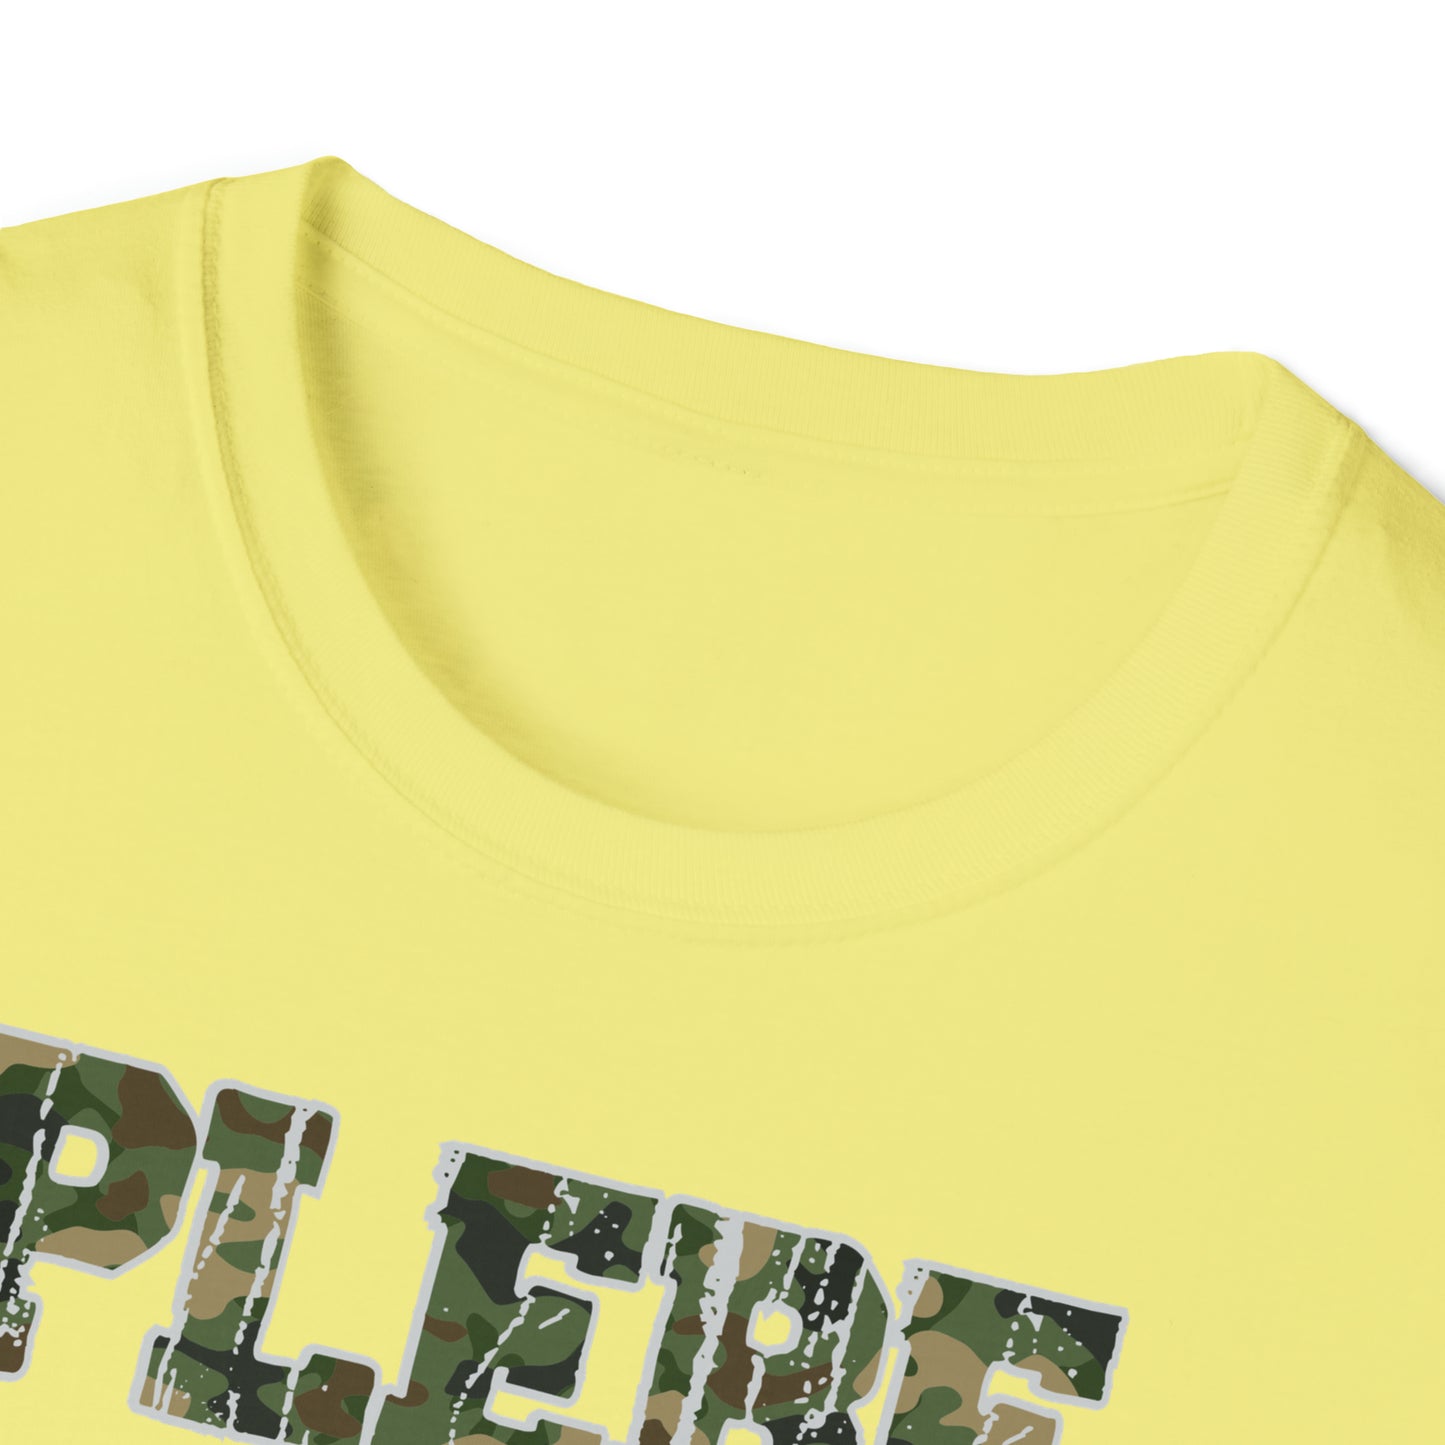 PLEBE GRANDMA | Unisex Softstyle T-Shirt